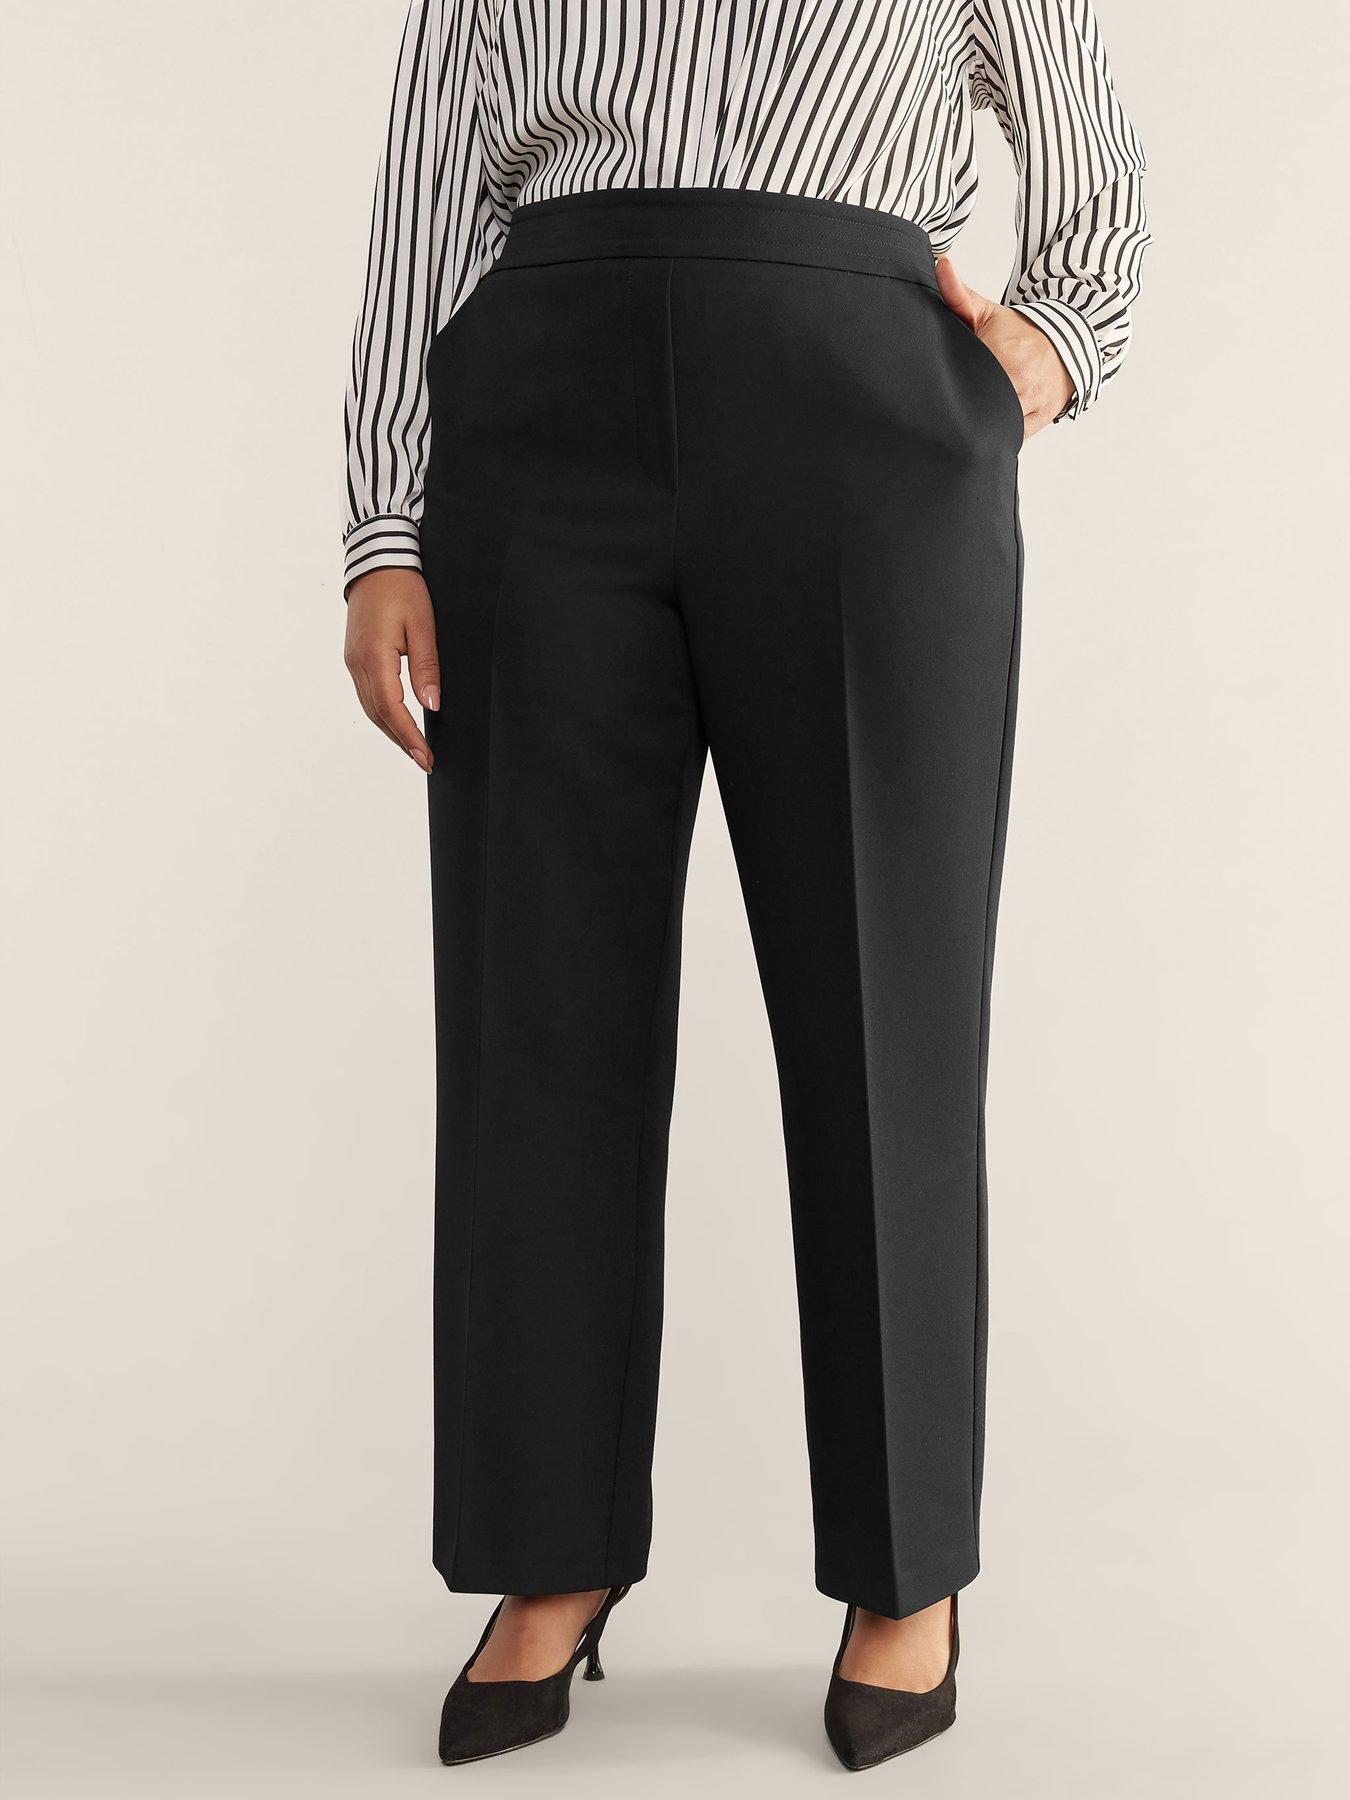 Next Cream Pinstripe Trouser Suit Ladies UK Size 12 | eBay